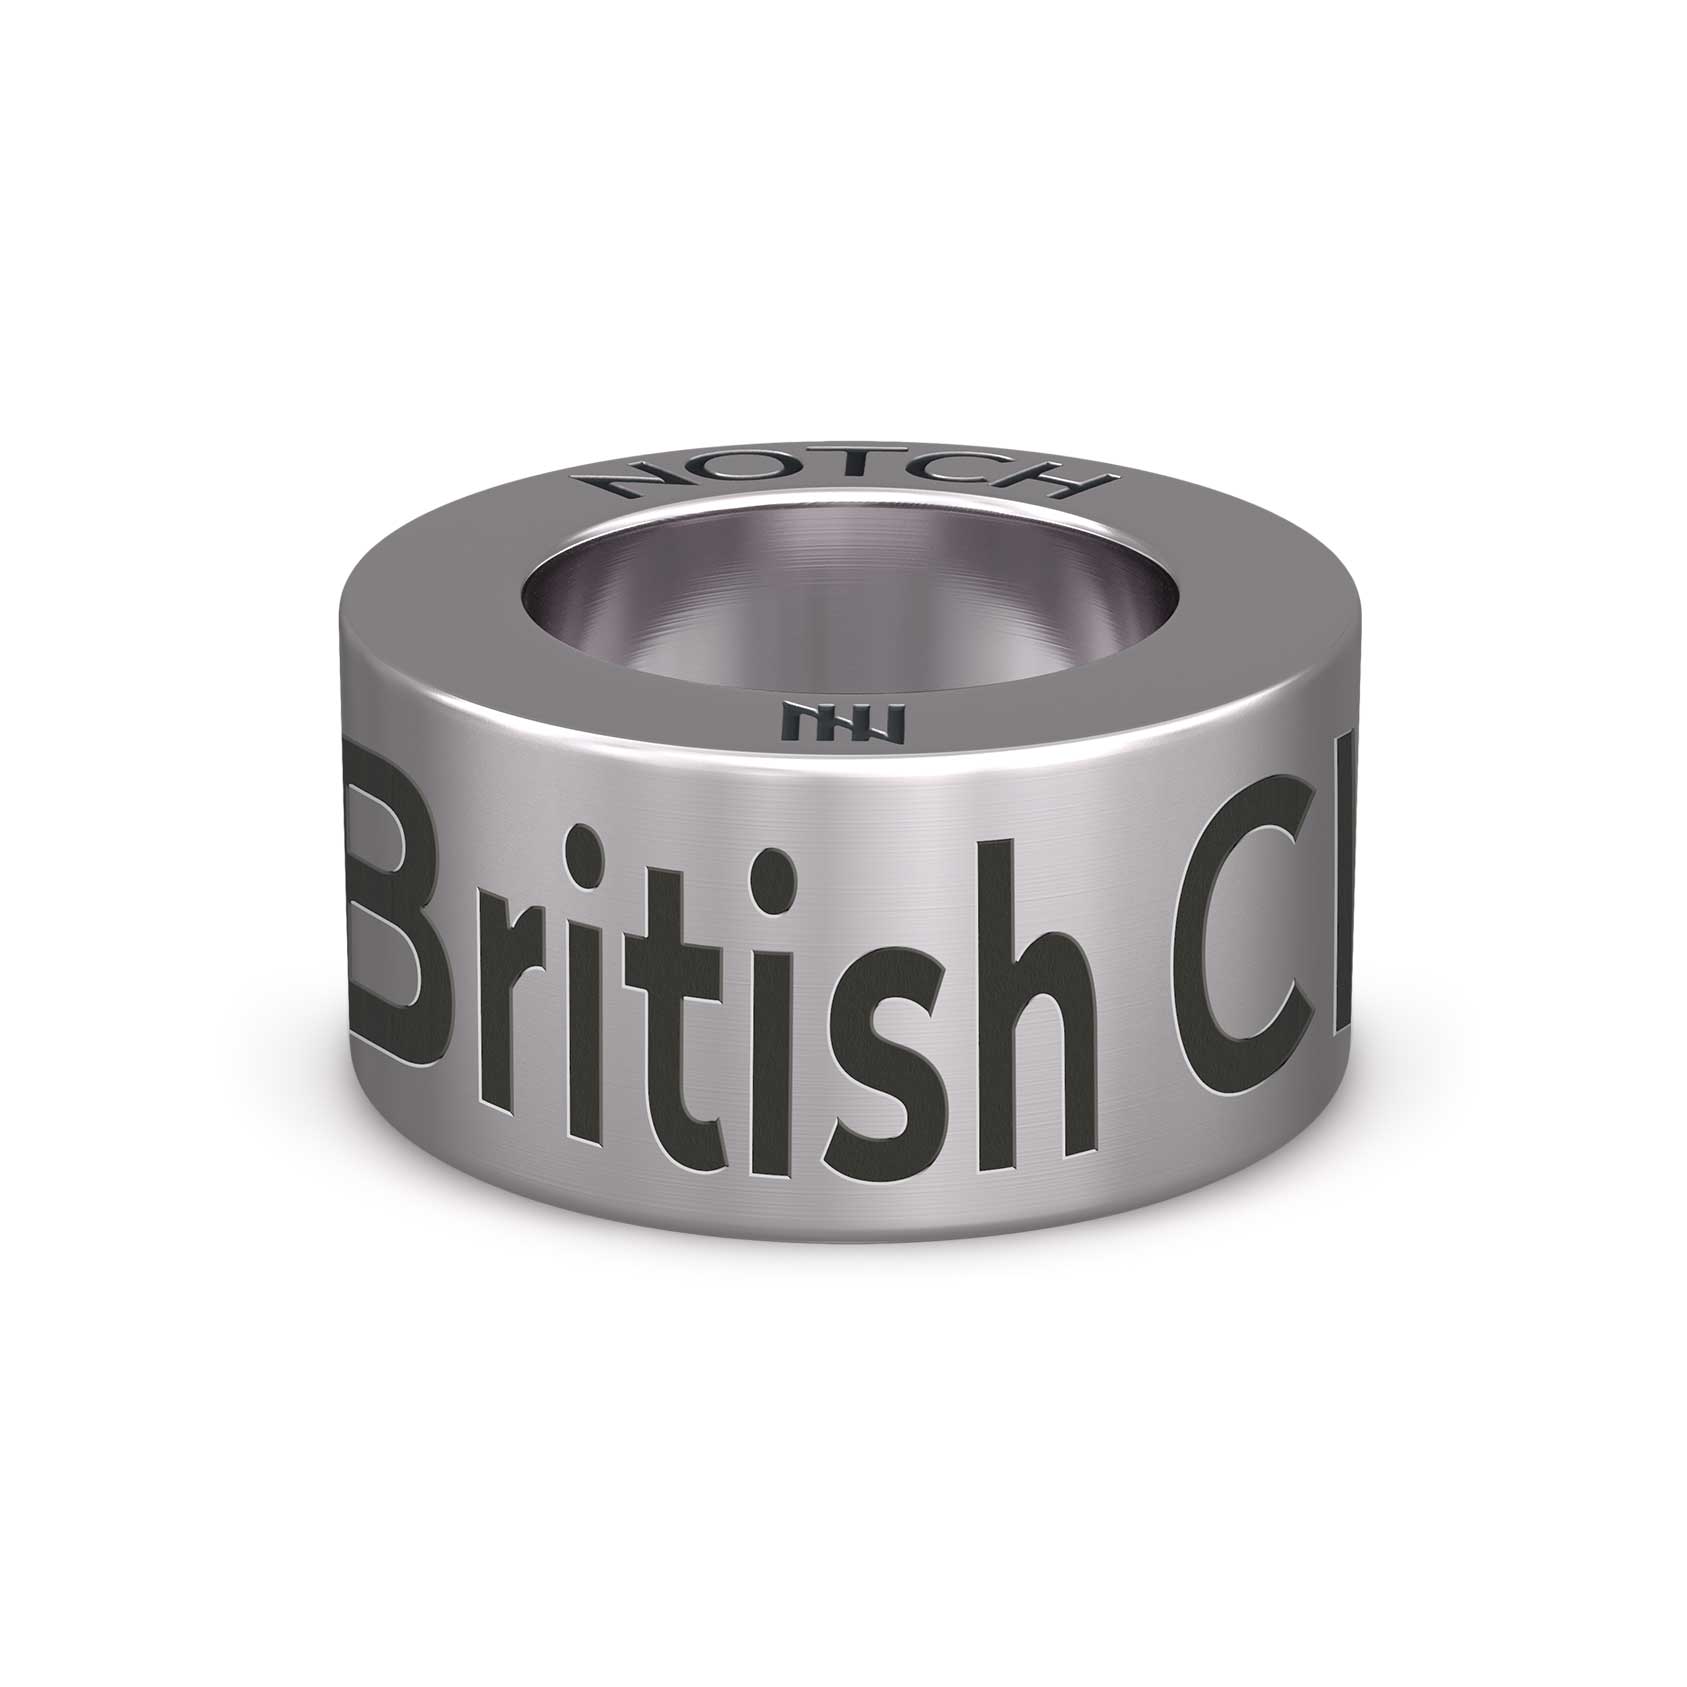 British Champion NOTCH Charm